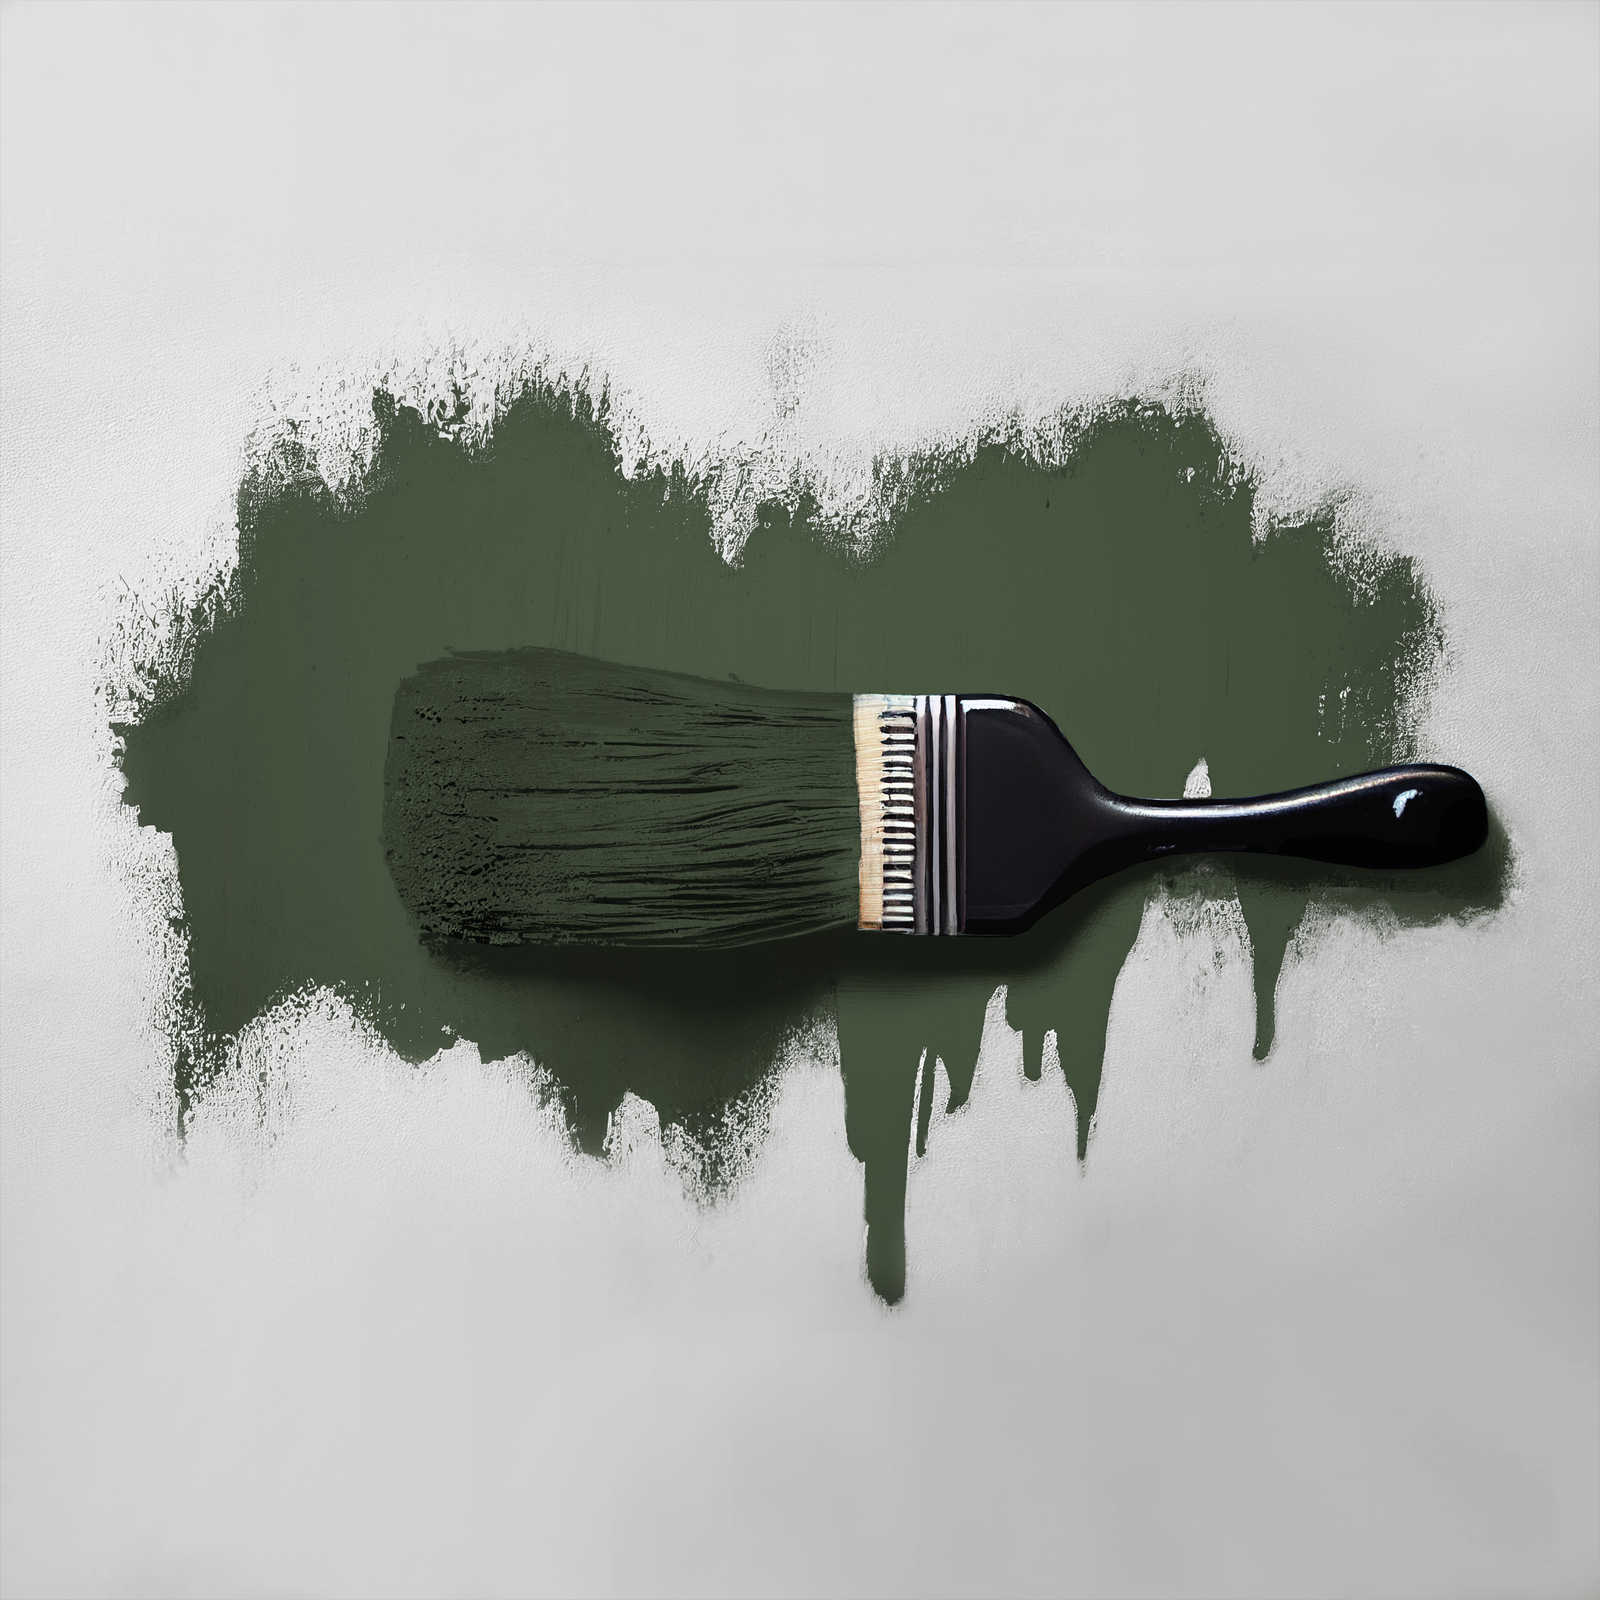             Peinture murale TCK4006 »Zippy Zuchini« en vert foncé intense – 5,0 litres
        